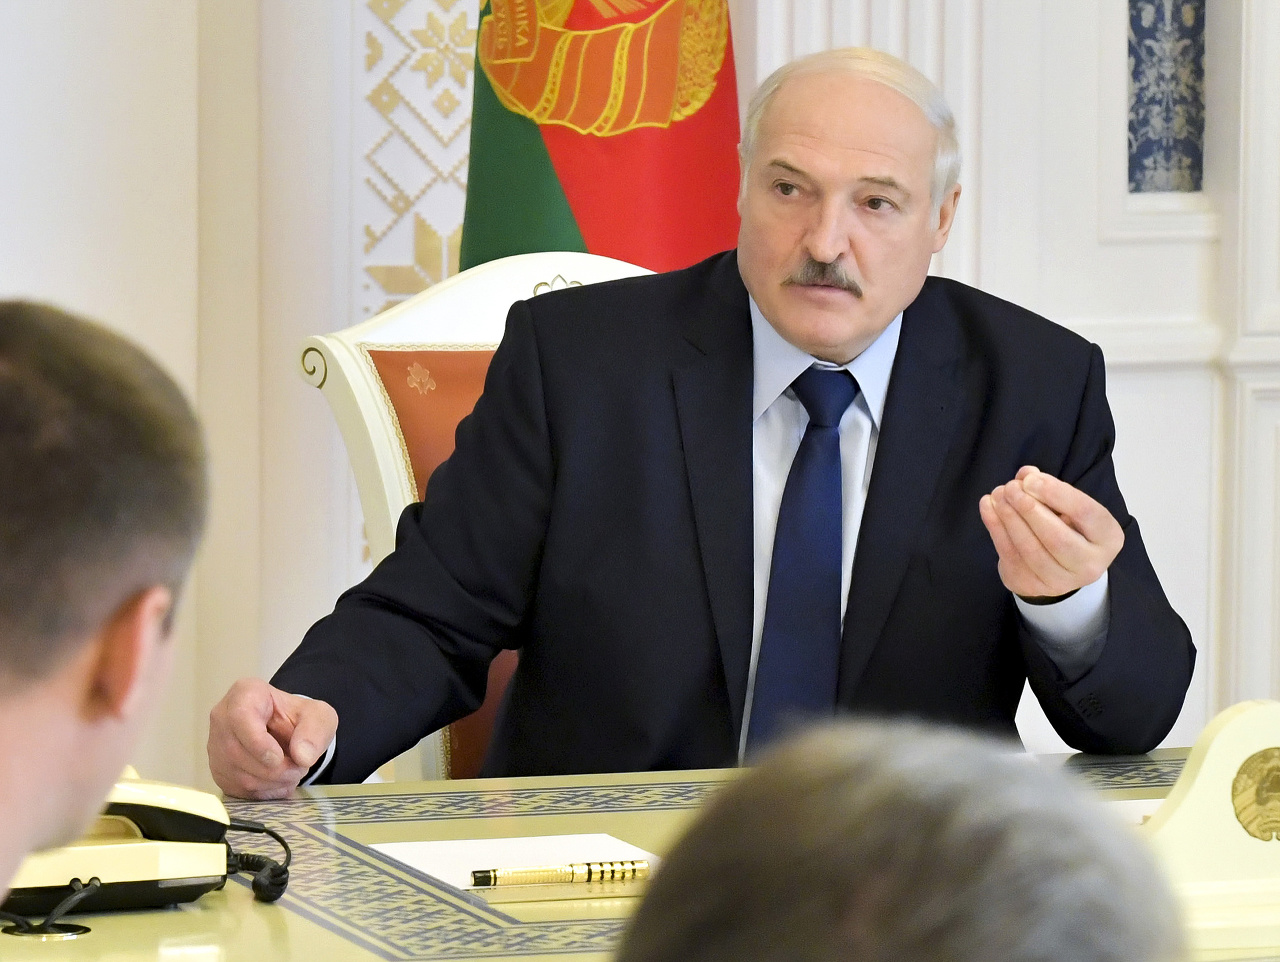 Bieloruský prezident Alexandr Lukašenko 